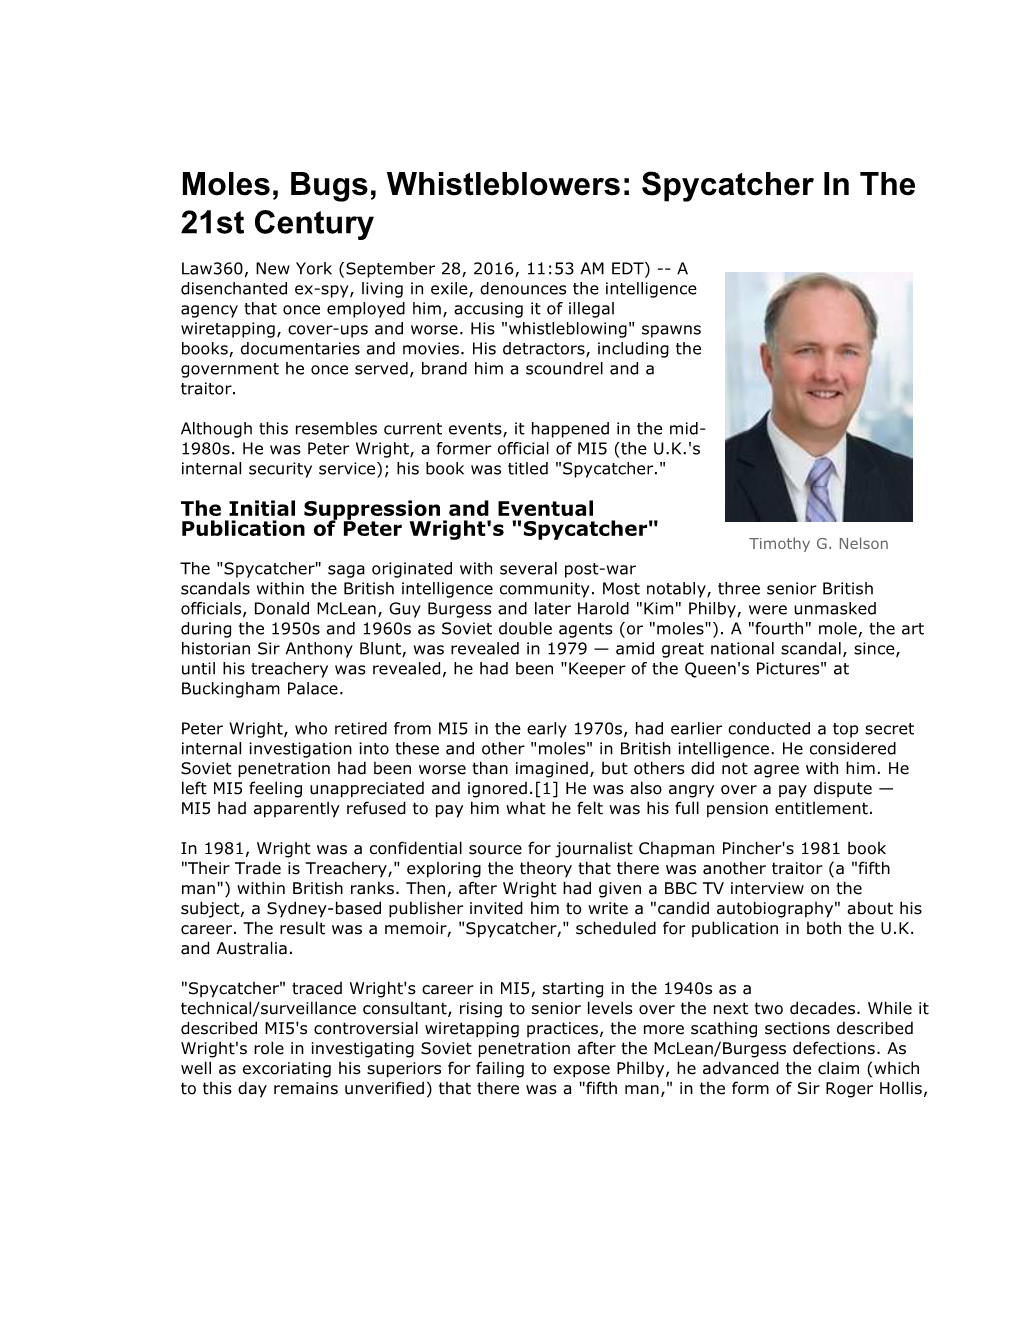 Moles, Bugs, Whistleblowers: Spycatcher in the 21St Century